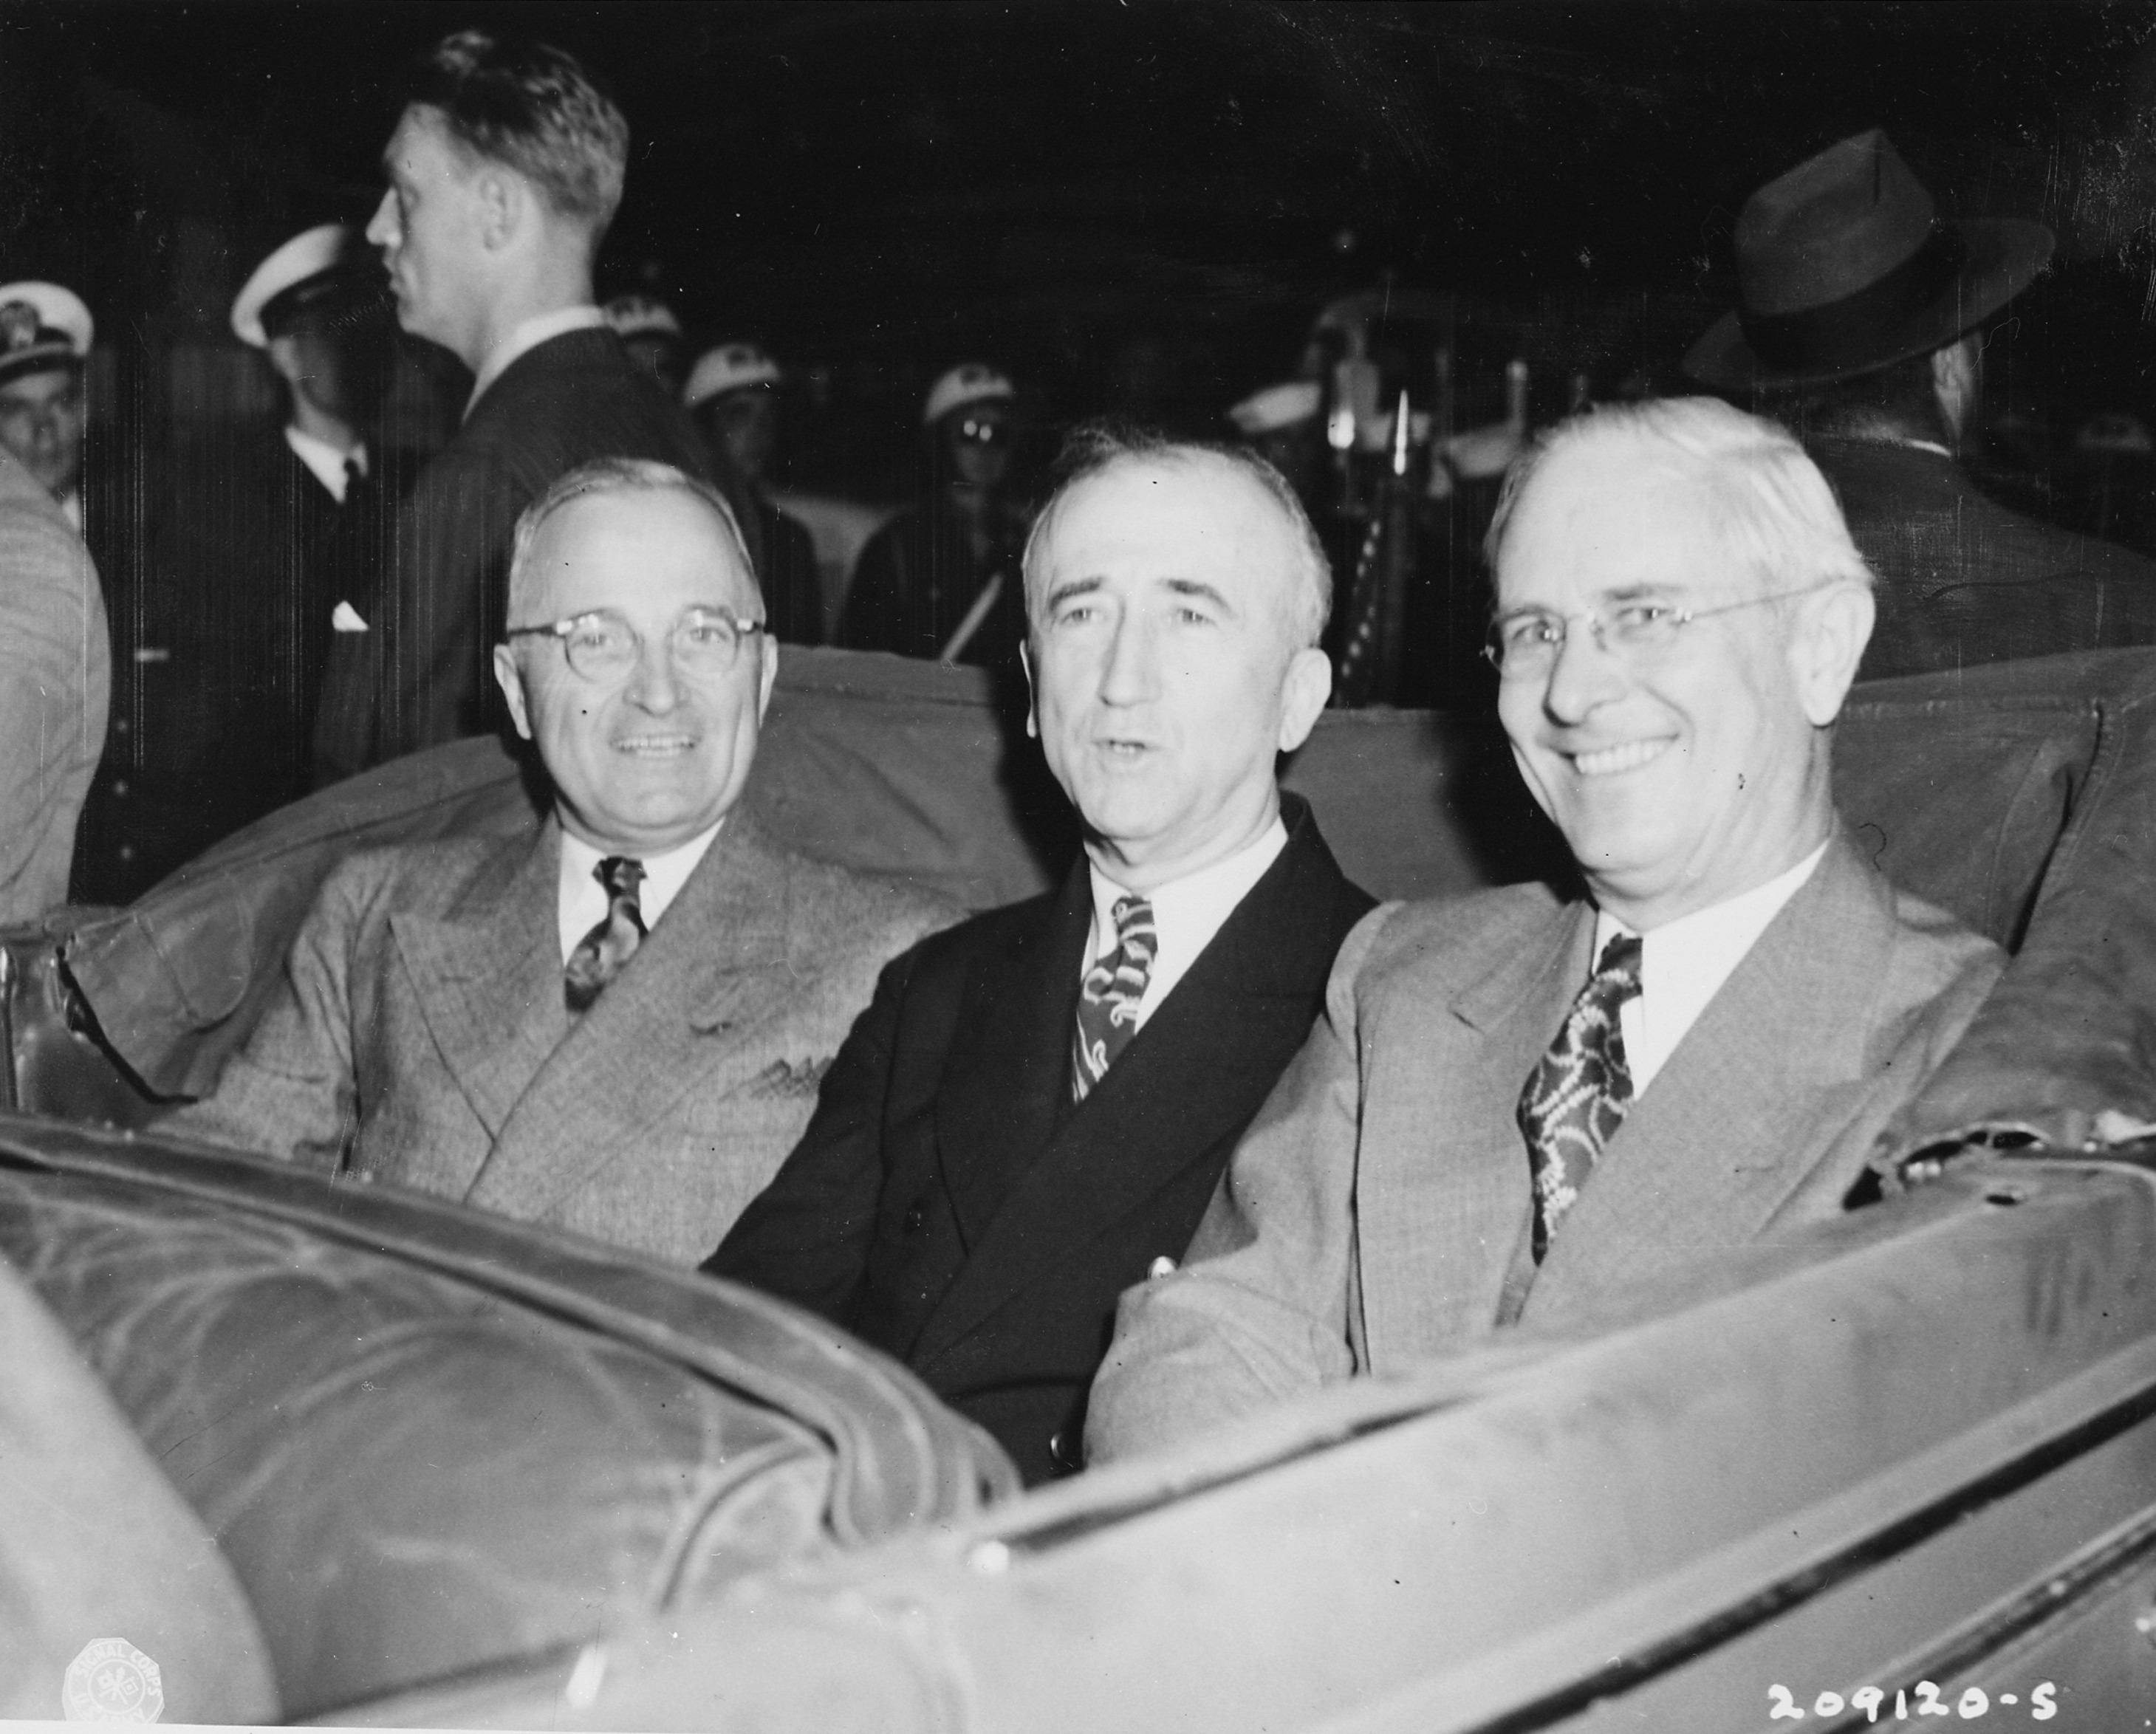 US President Harry Truman, Secretary of State James Byrnes, and Ambassador to Belgium Charles Sawyer in a car, Antwerp, Belgium, 15 Jul 1945, photo 2 of 2